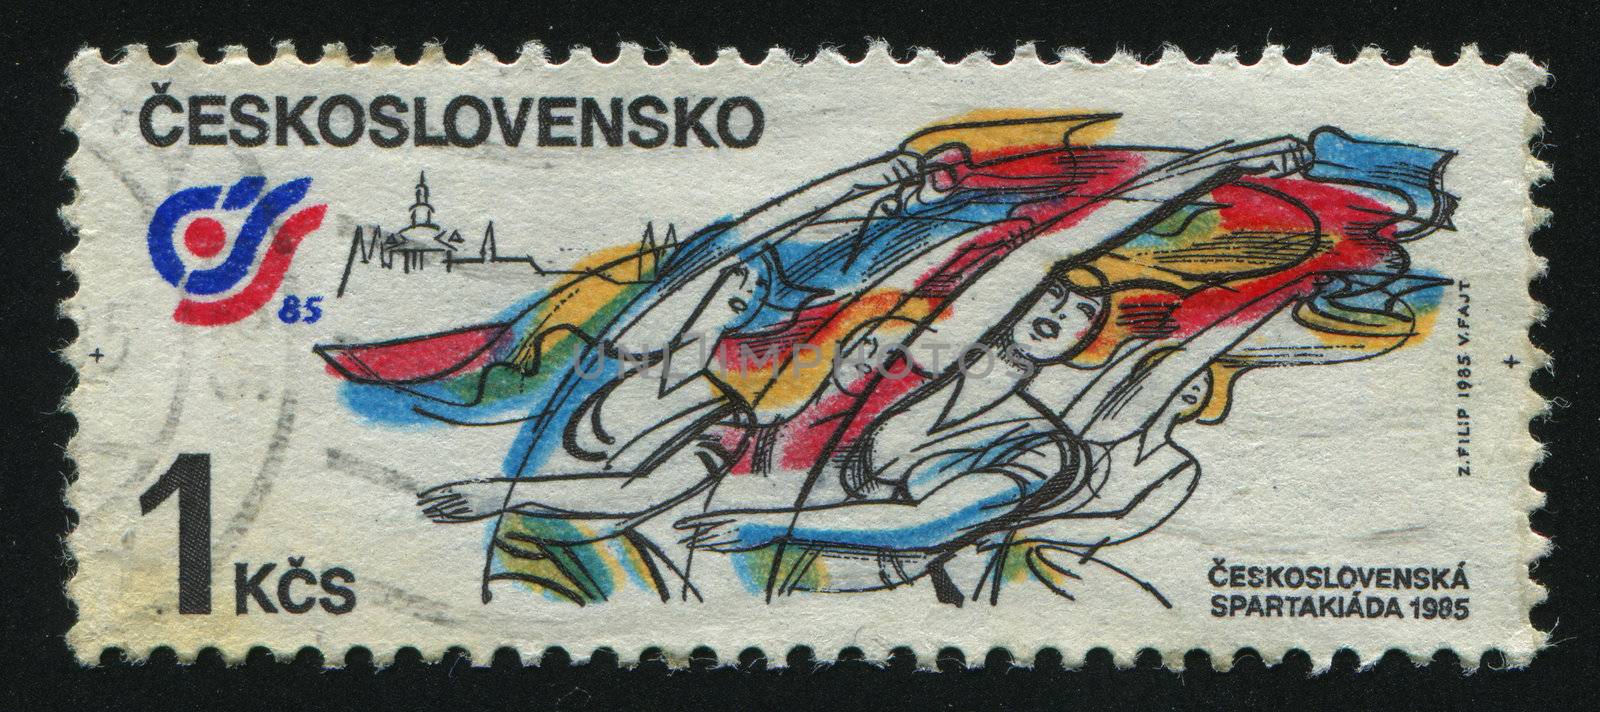 CZECHOSLOVAKIA - CIRCA 1985: National sports competitions, circa 1985.